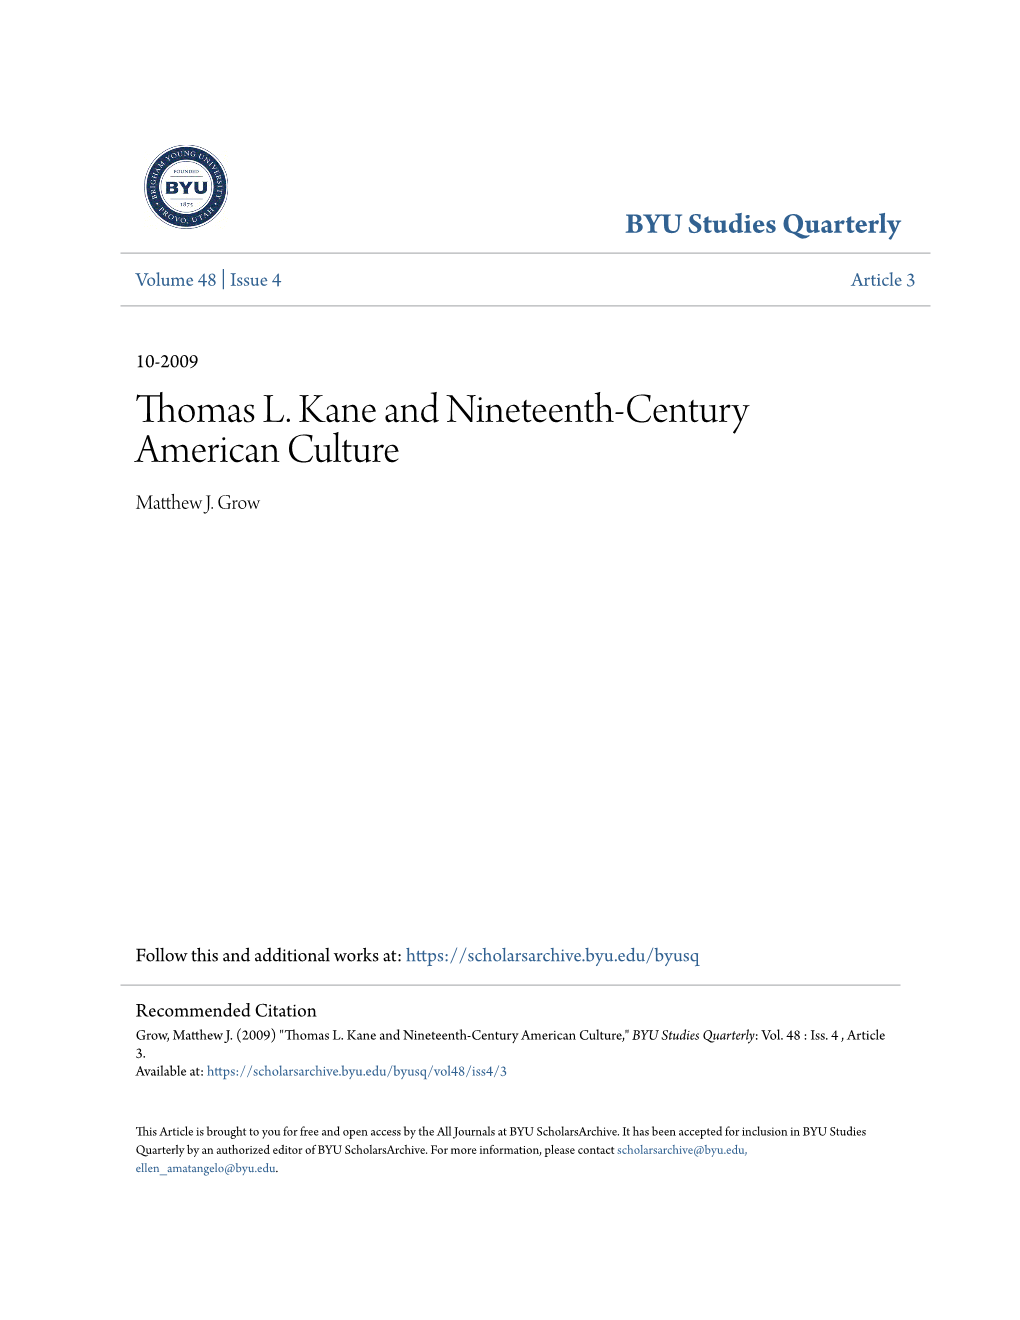 Thomas L. Kane and Nineteenth-Century American Culture Matthew .J Grow